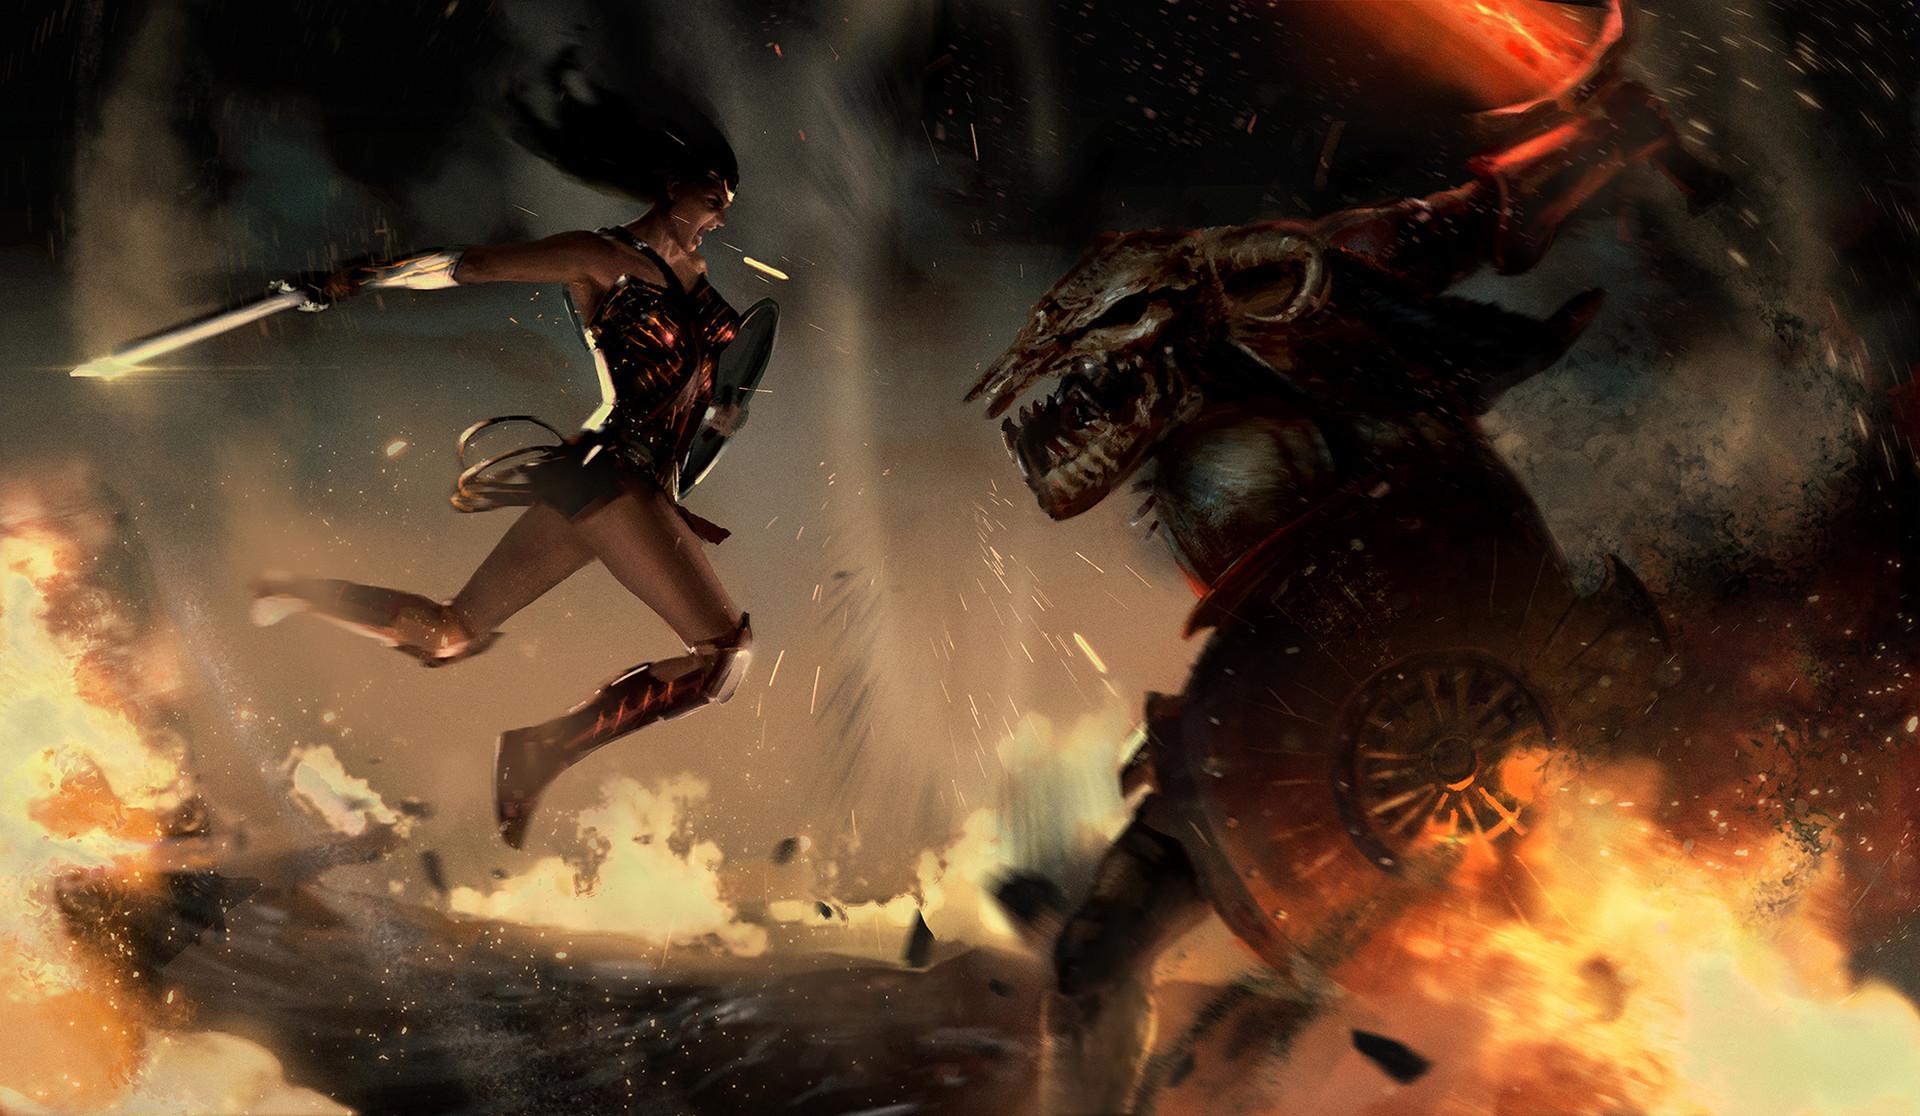 Wonder Woman Vs Ares, HD Artist, 4k Wallpaper, Image, Background